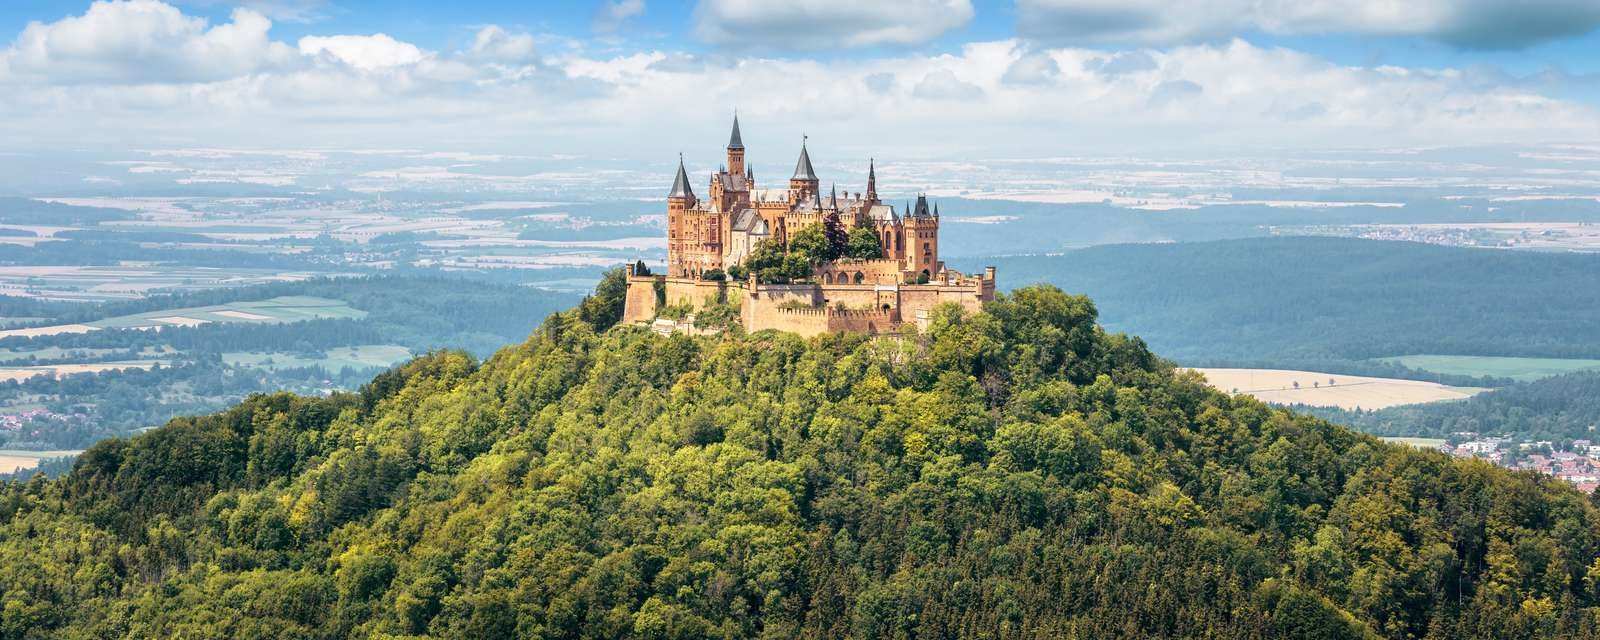 Burg Hohenzollern in Württemberg